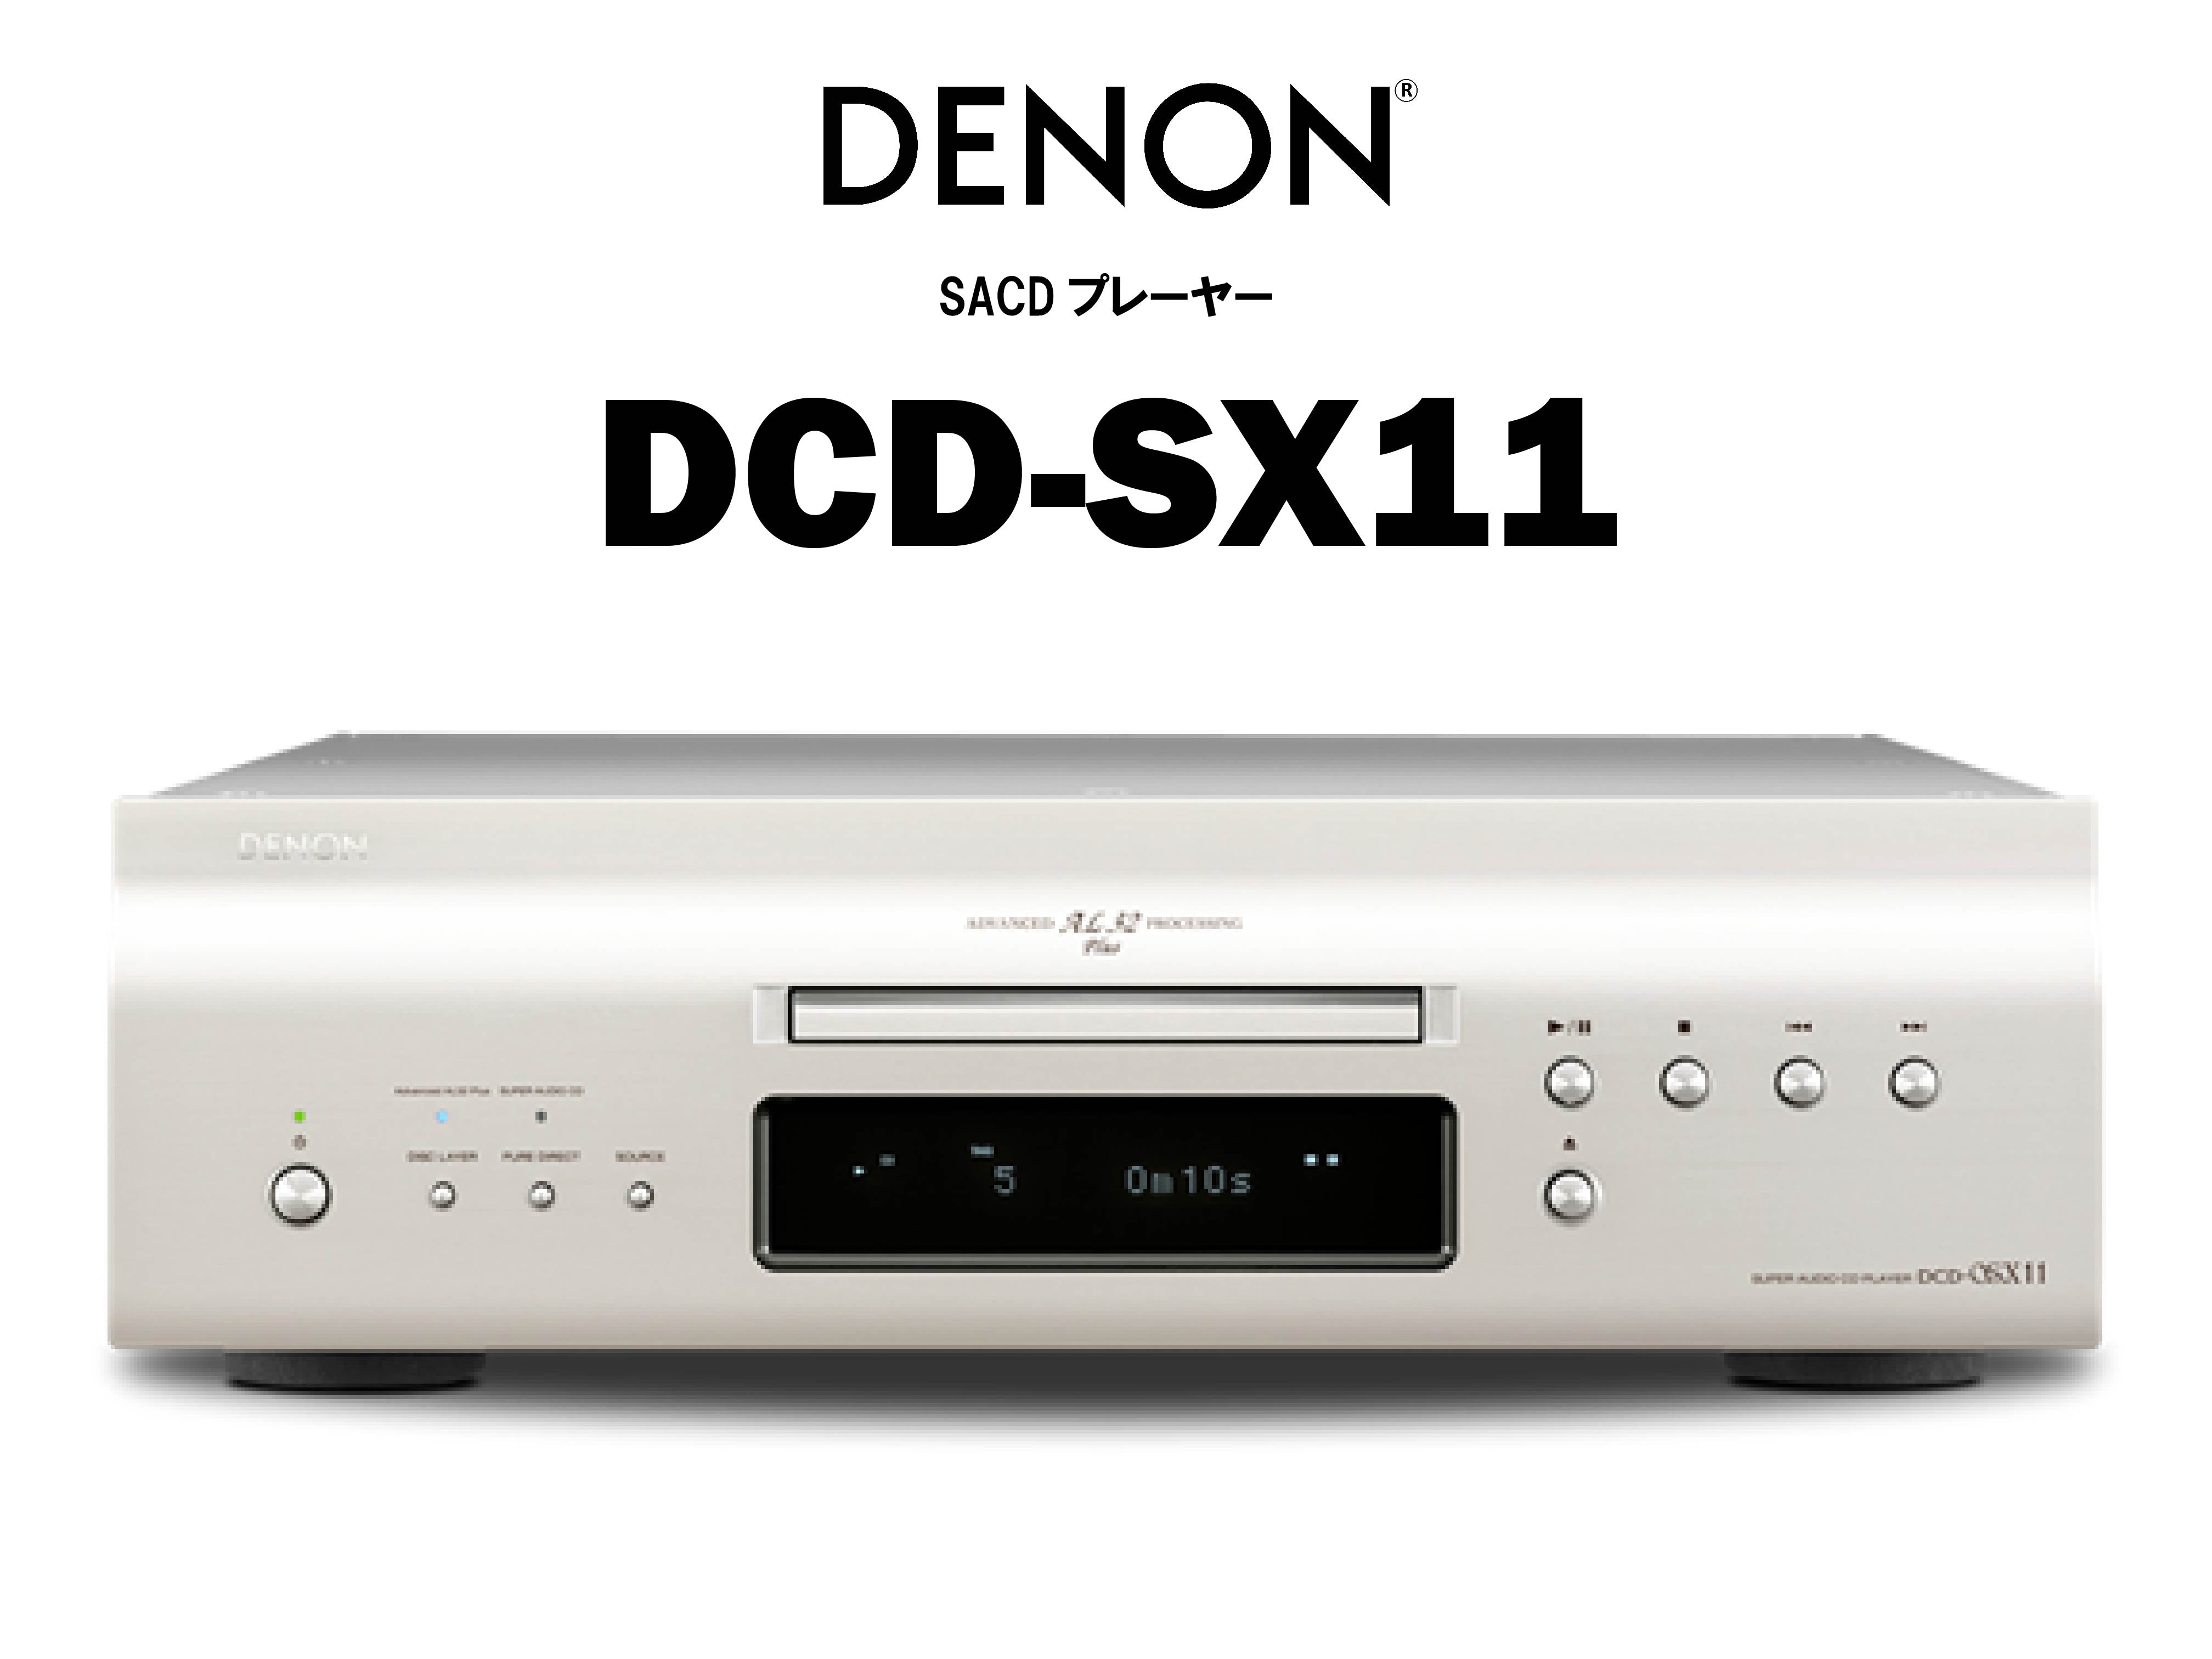 DENON DCD-SX11